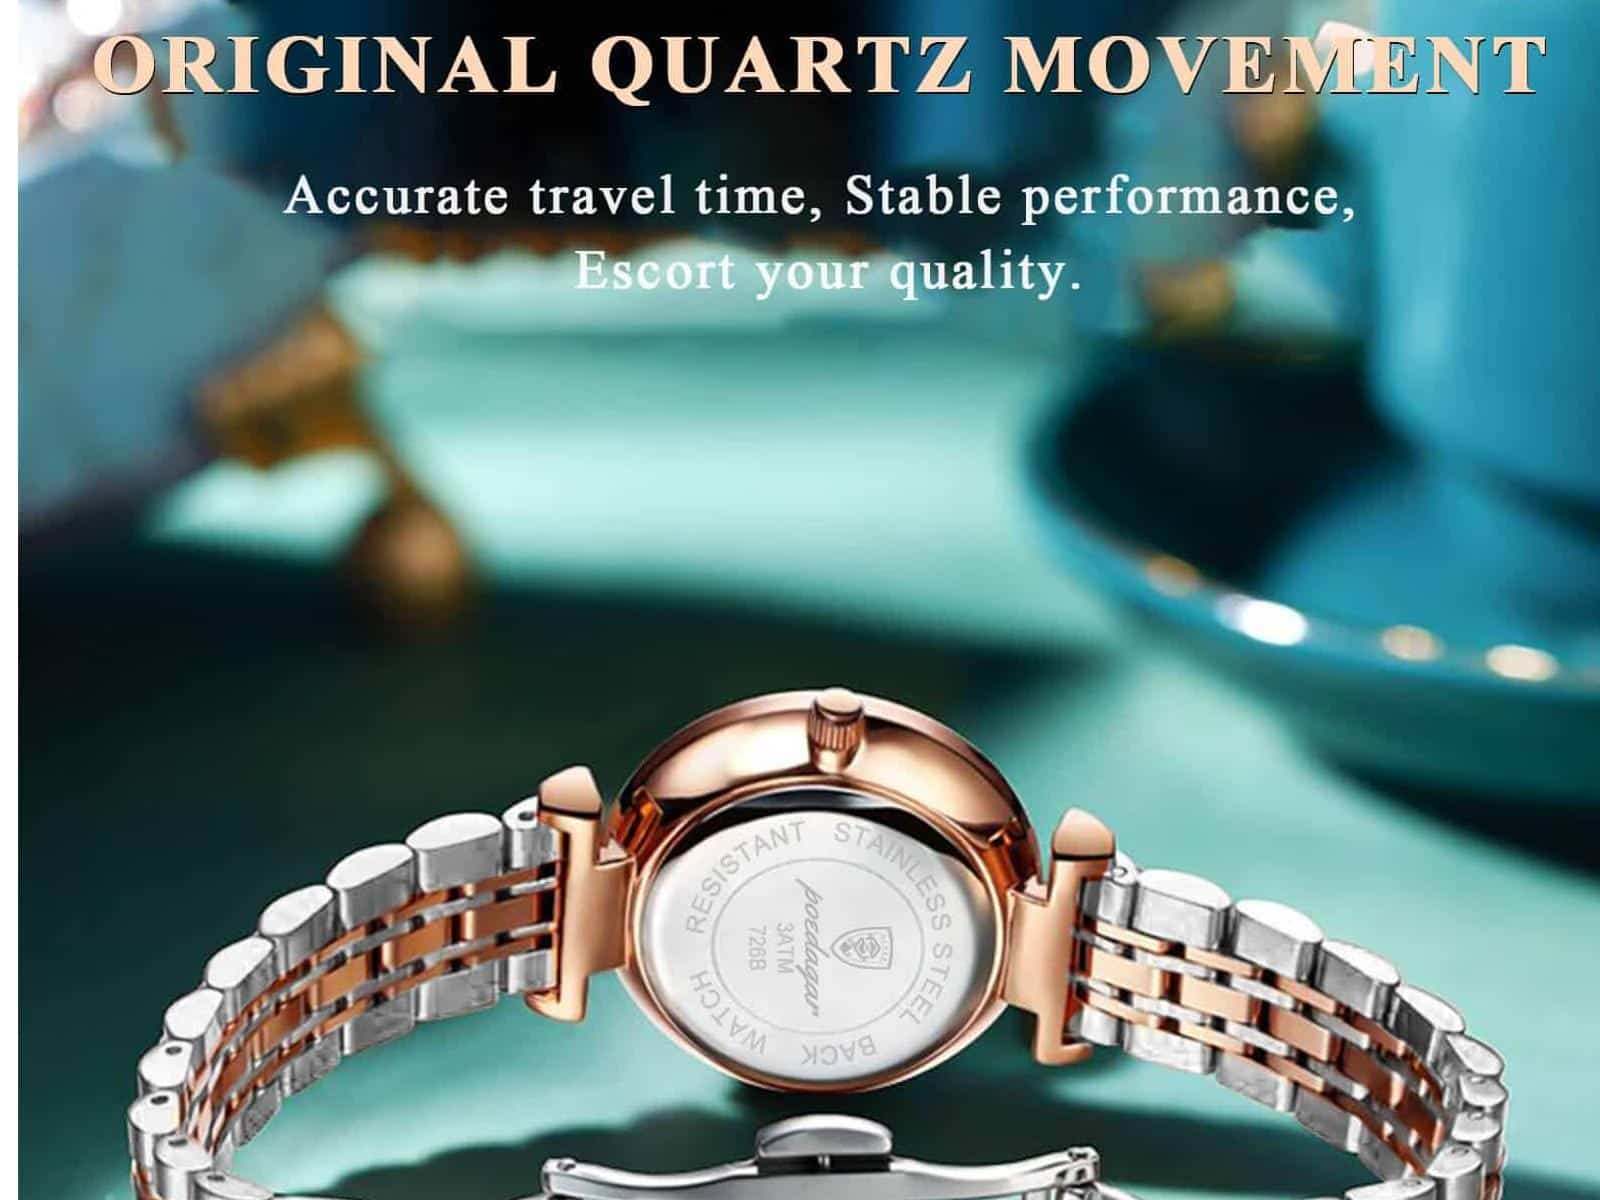 POEDAGAR יוקרה שעון עבור אישה באיכות גבוהה יהלומי גבירותיי קוורץ שעון עמיד למים תאריך נירוסטה נשים שעונים reloj + תיבה